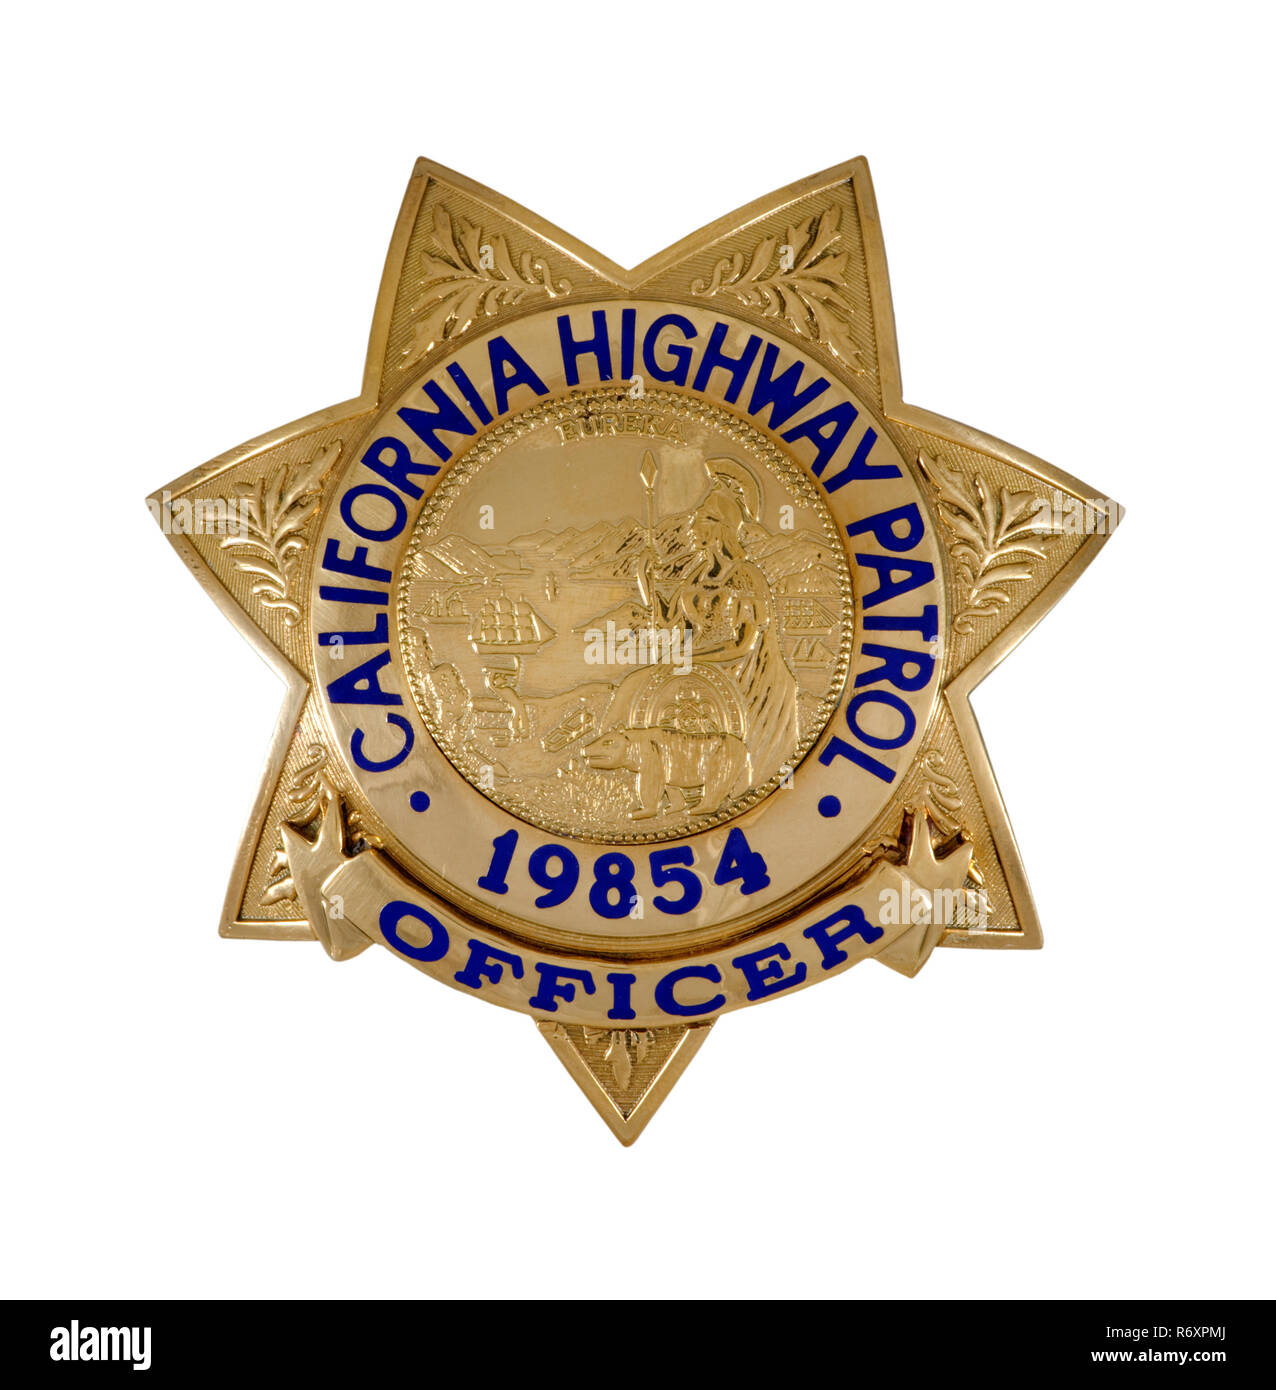 California Highway Patrol Officer's badge Banque D'Images